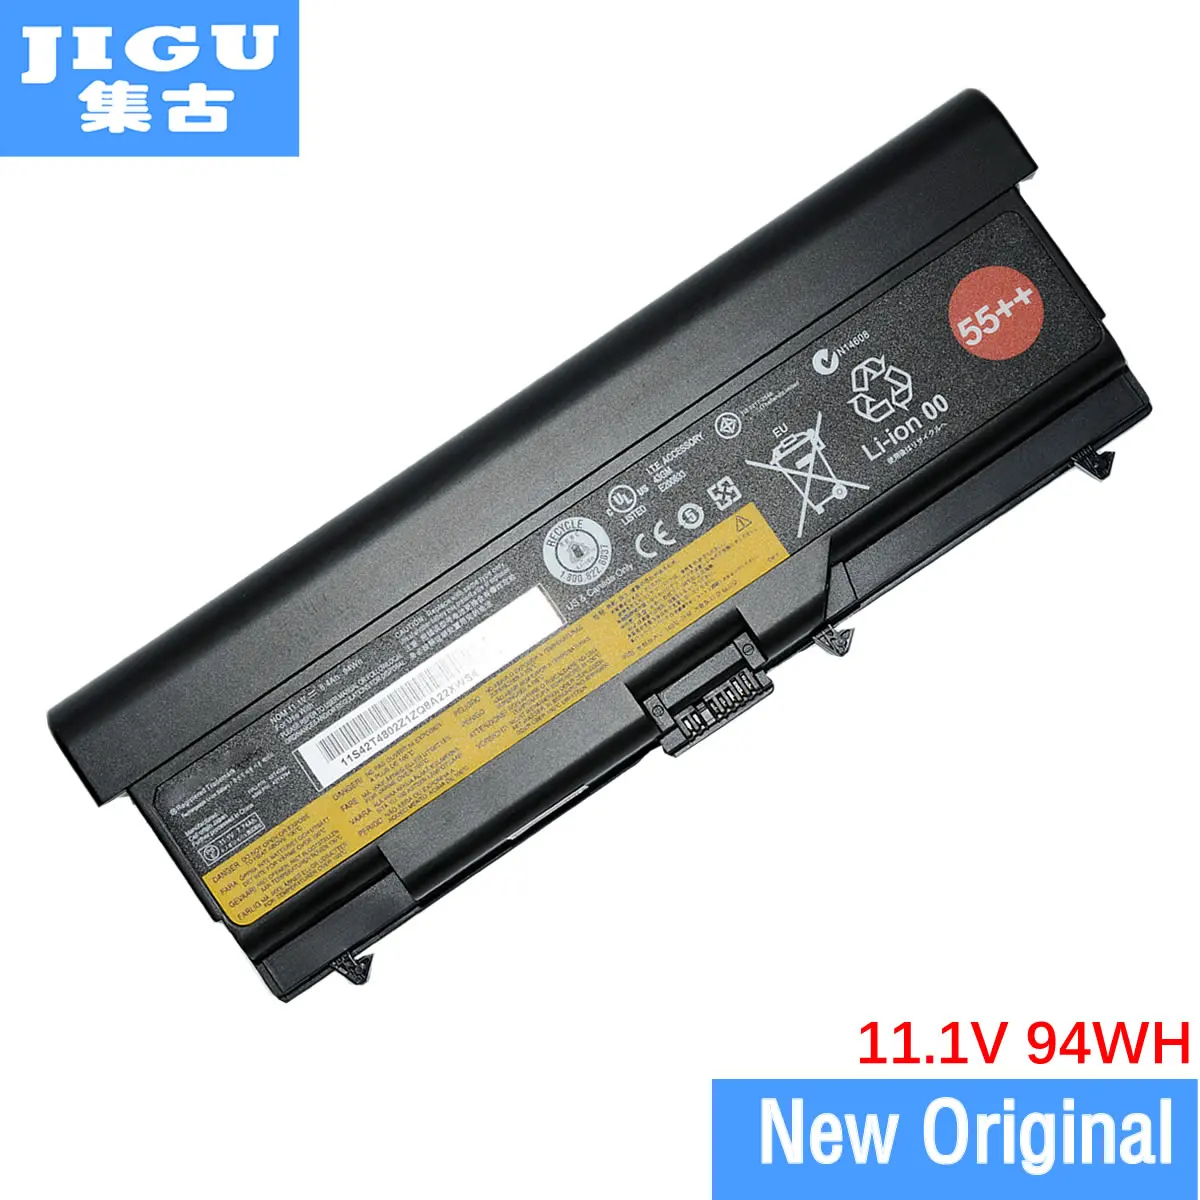 

JIGU Original Laptop Battery For Lenovo SL400 SL410 SL410k SL500 SL510 T410 T410i T420 T420i T520 W510 W520 9Cells